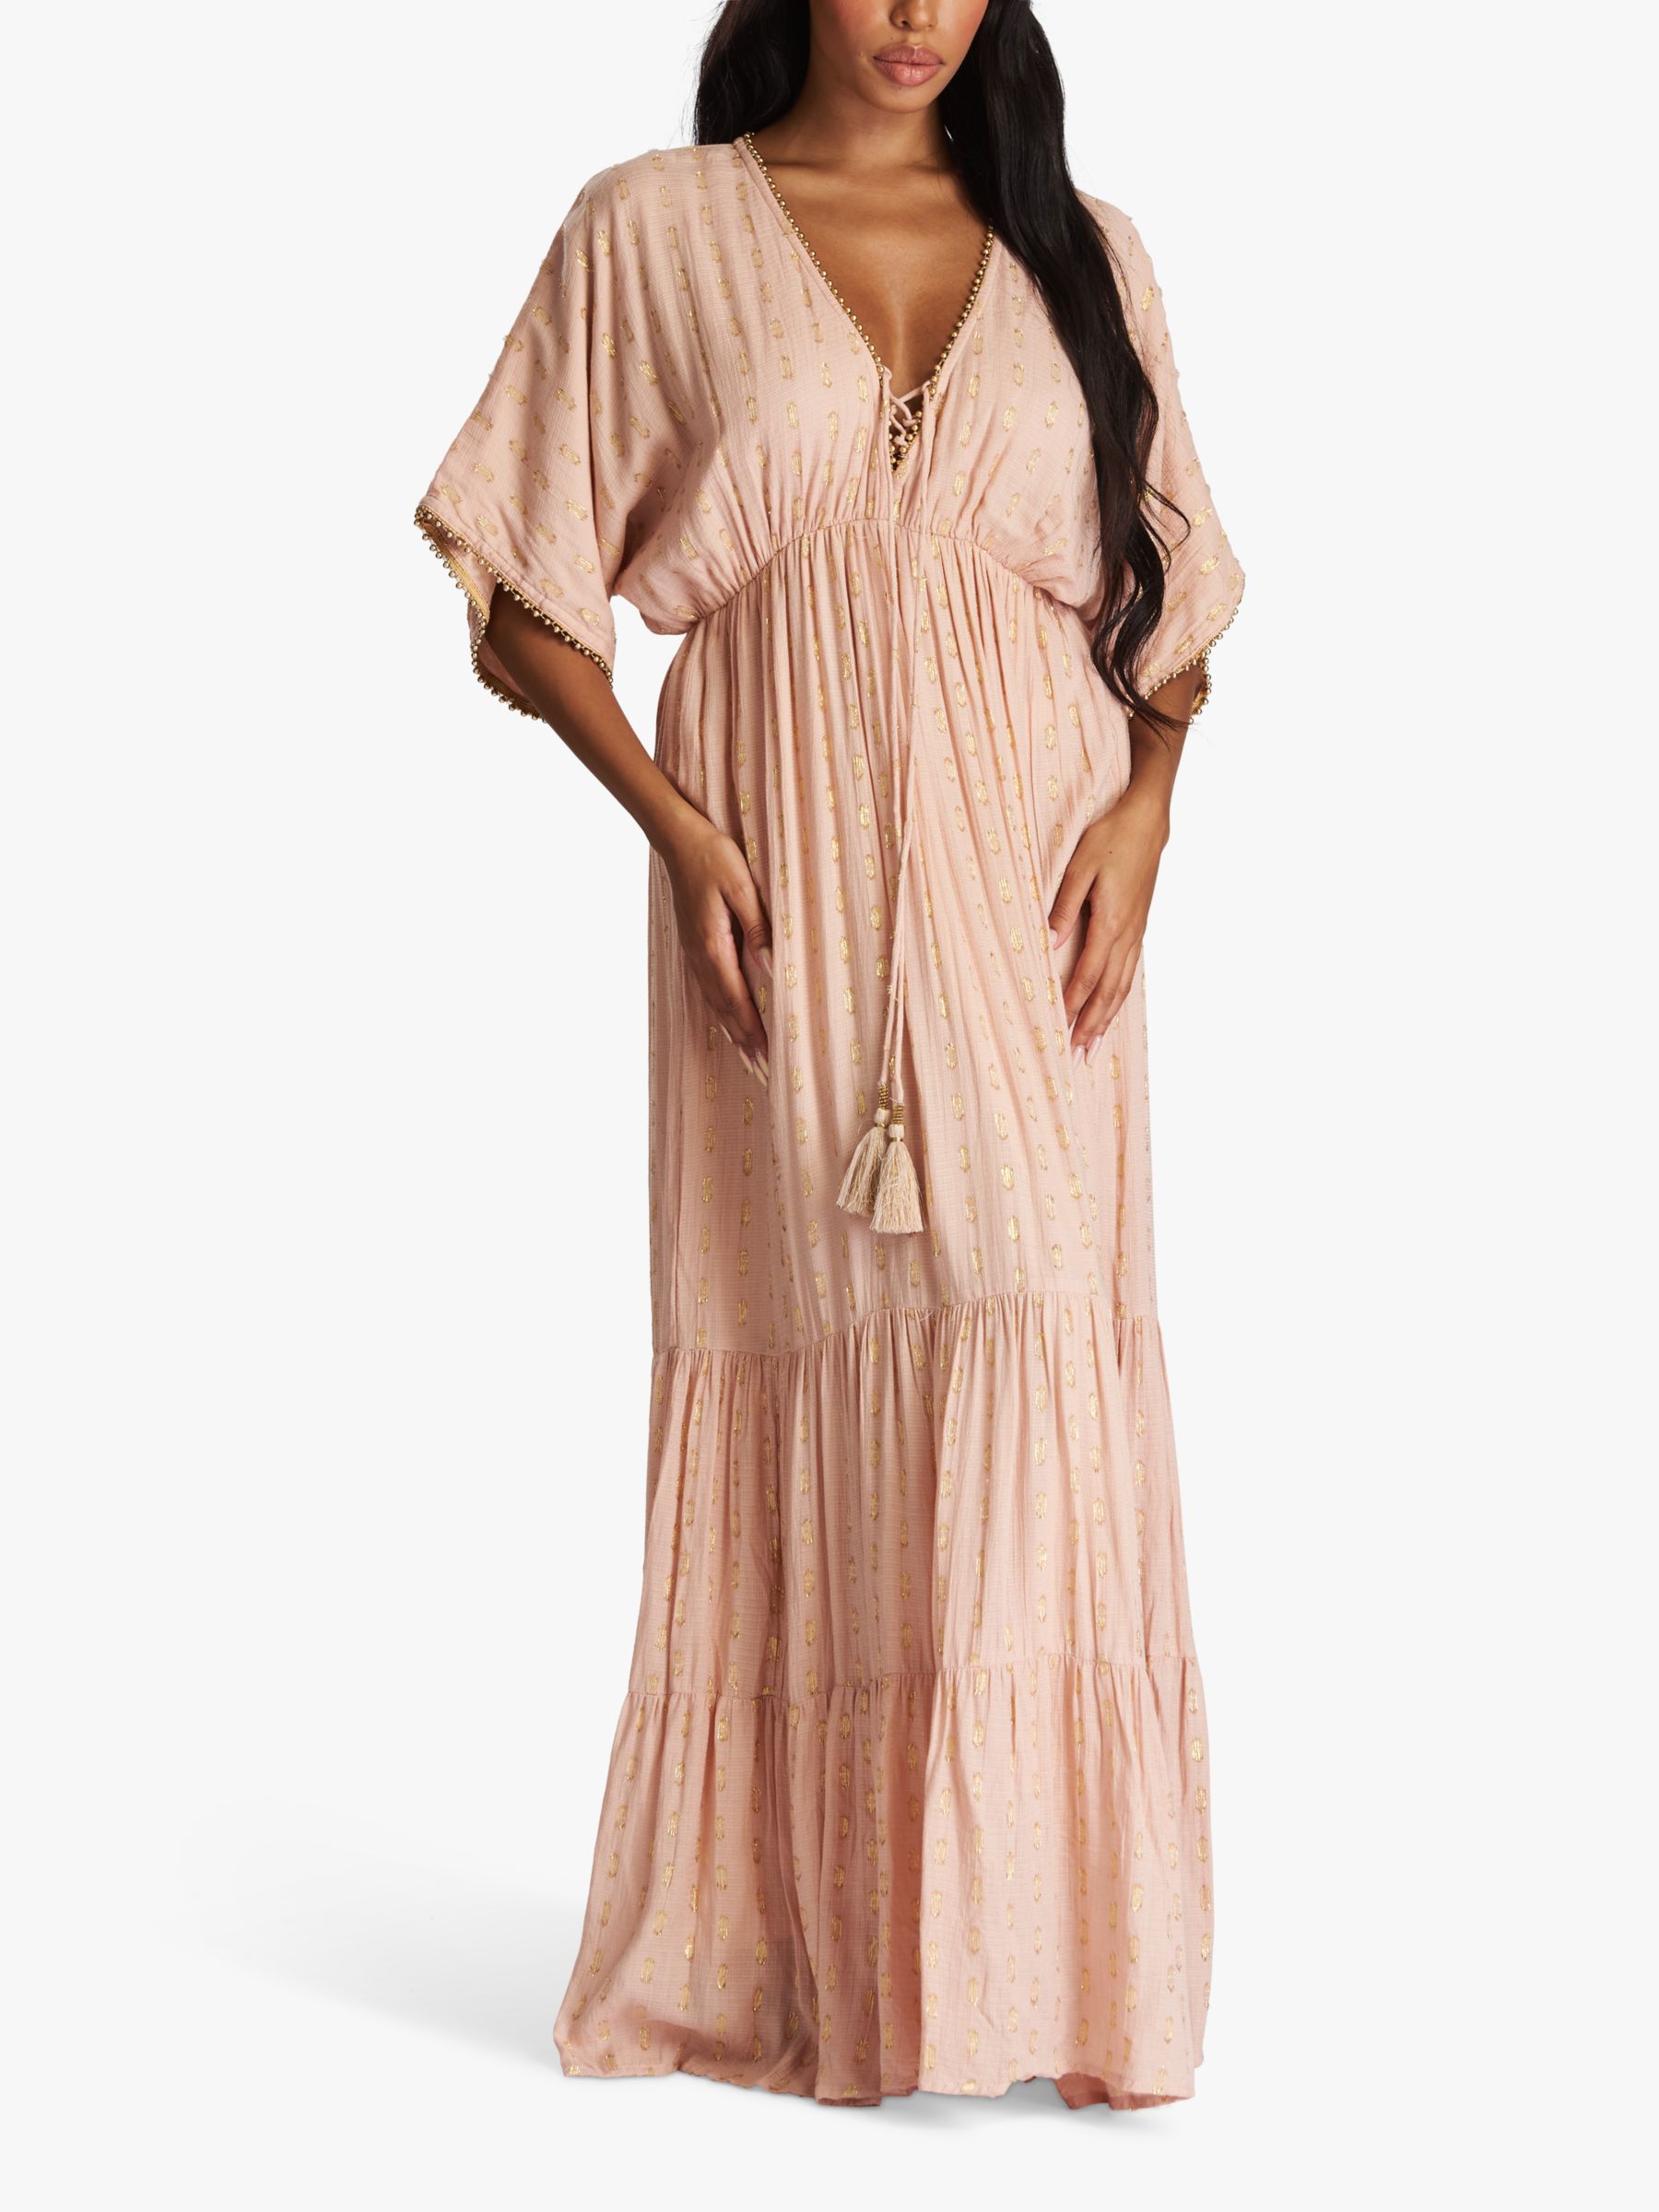 South Beach Metallic Jacquard Spot Tiered Maxi Dress, Nude, 8